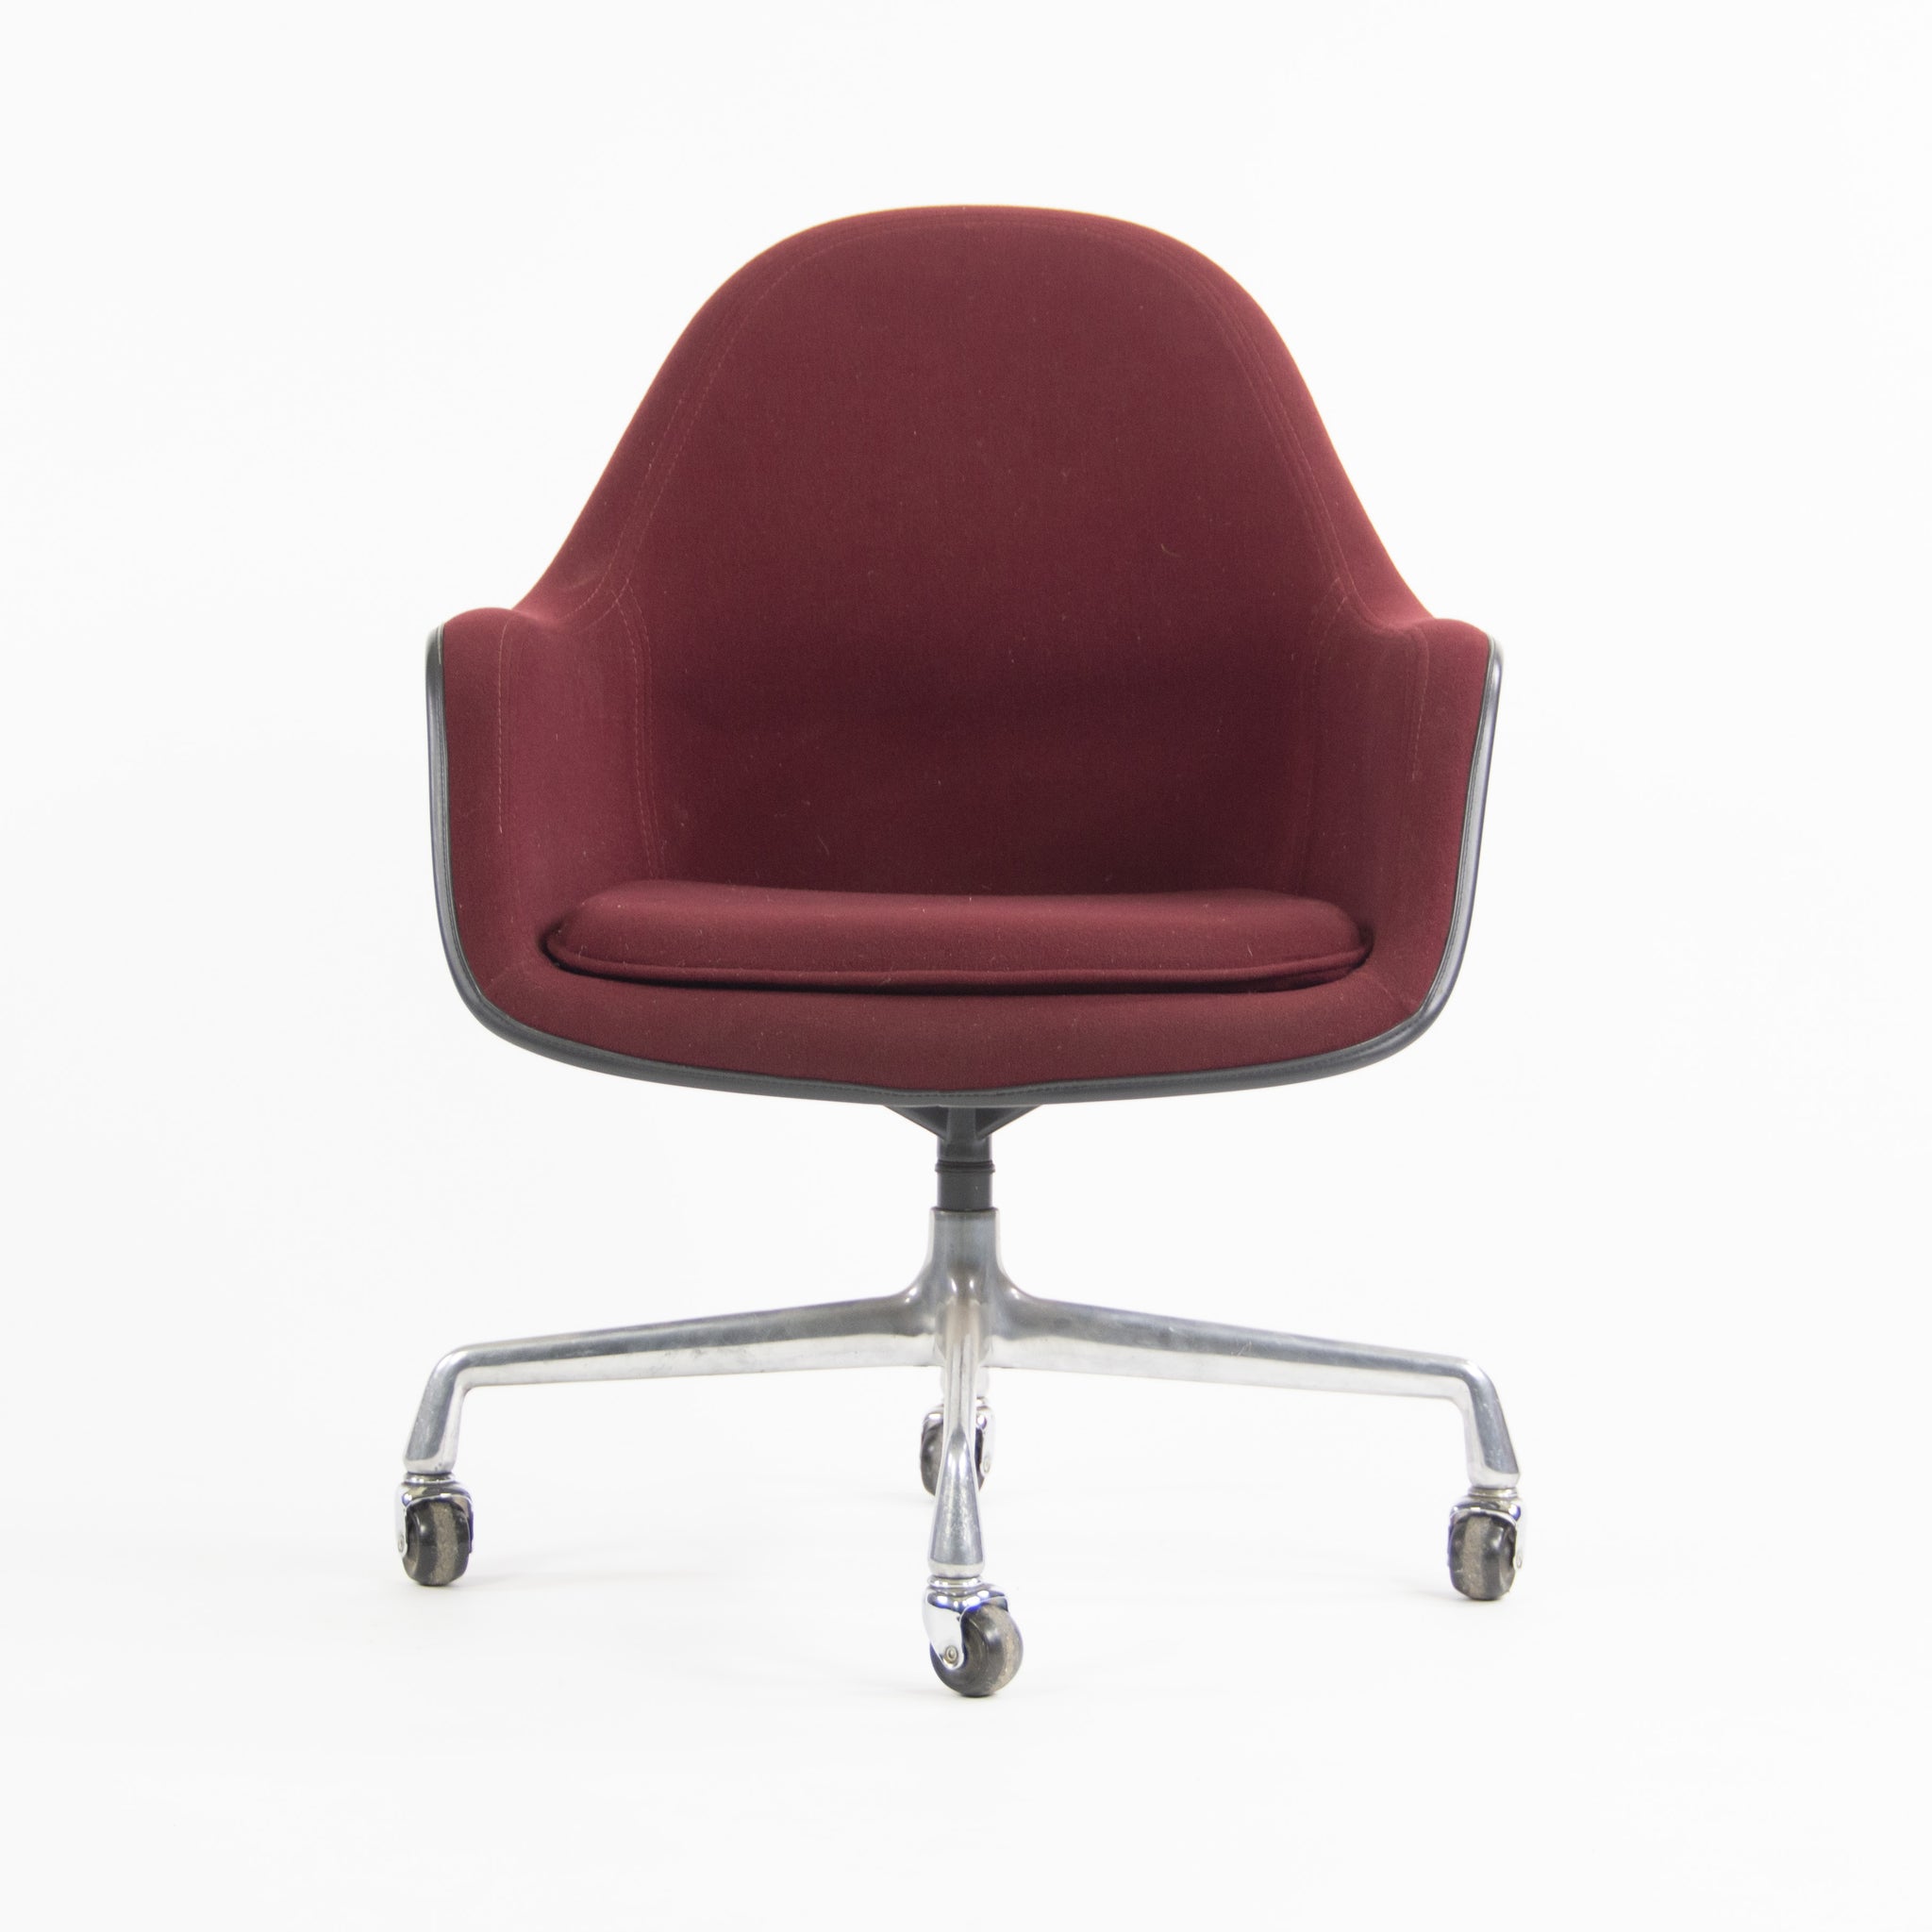 1985 Eames Herman Miller EC175 Upholstered Fiberglass Shell Chair Museum Quality